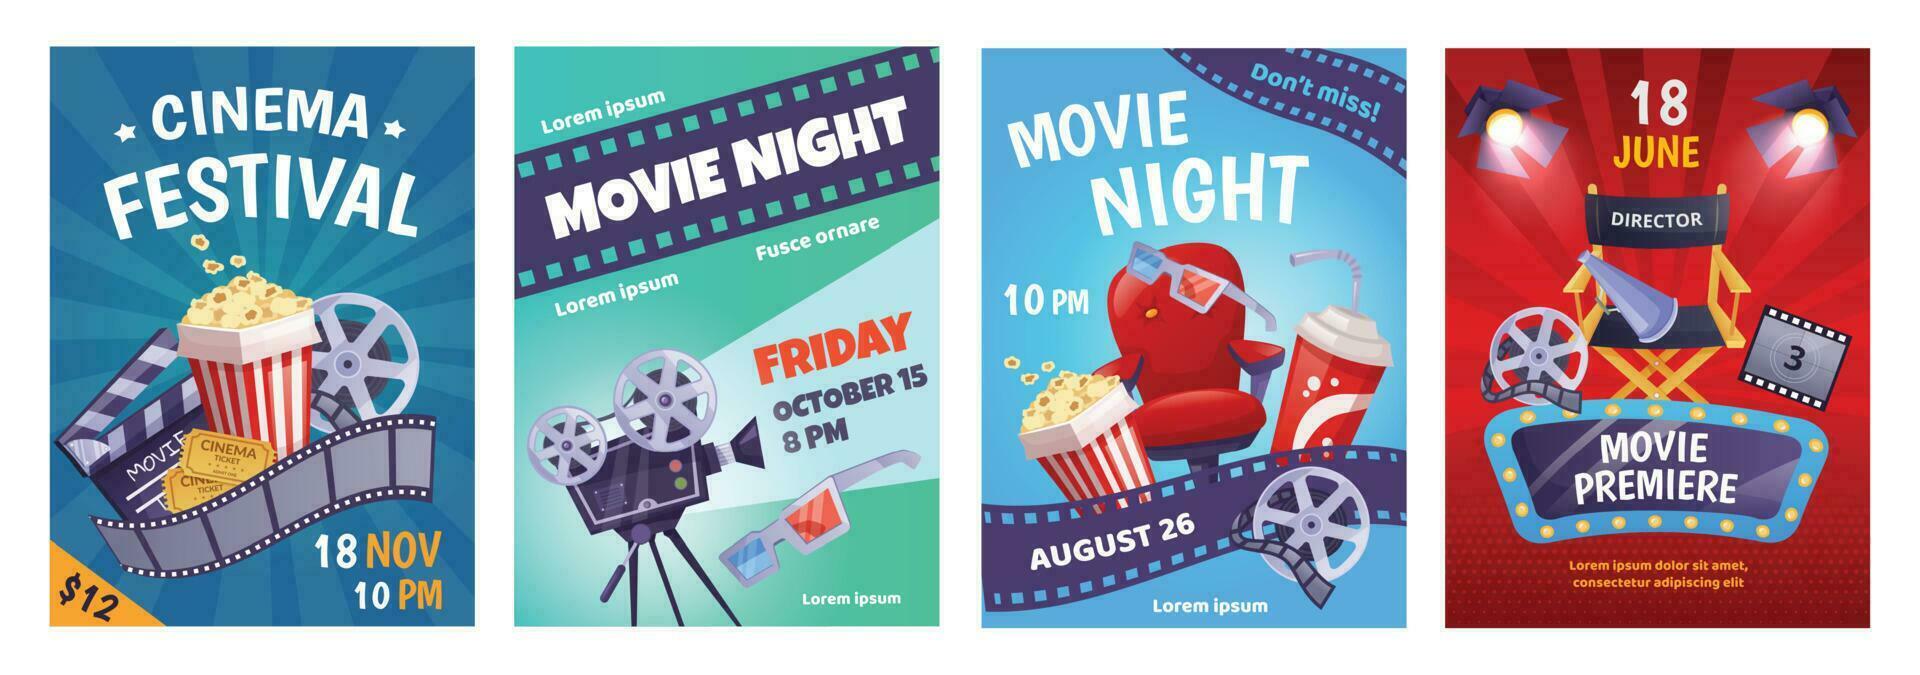 Cartoon cinema poster template, film festival invitation. Movie night event posters with popcorn, soda, camera, movie premiere flyer vector set